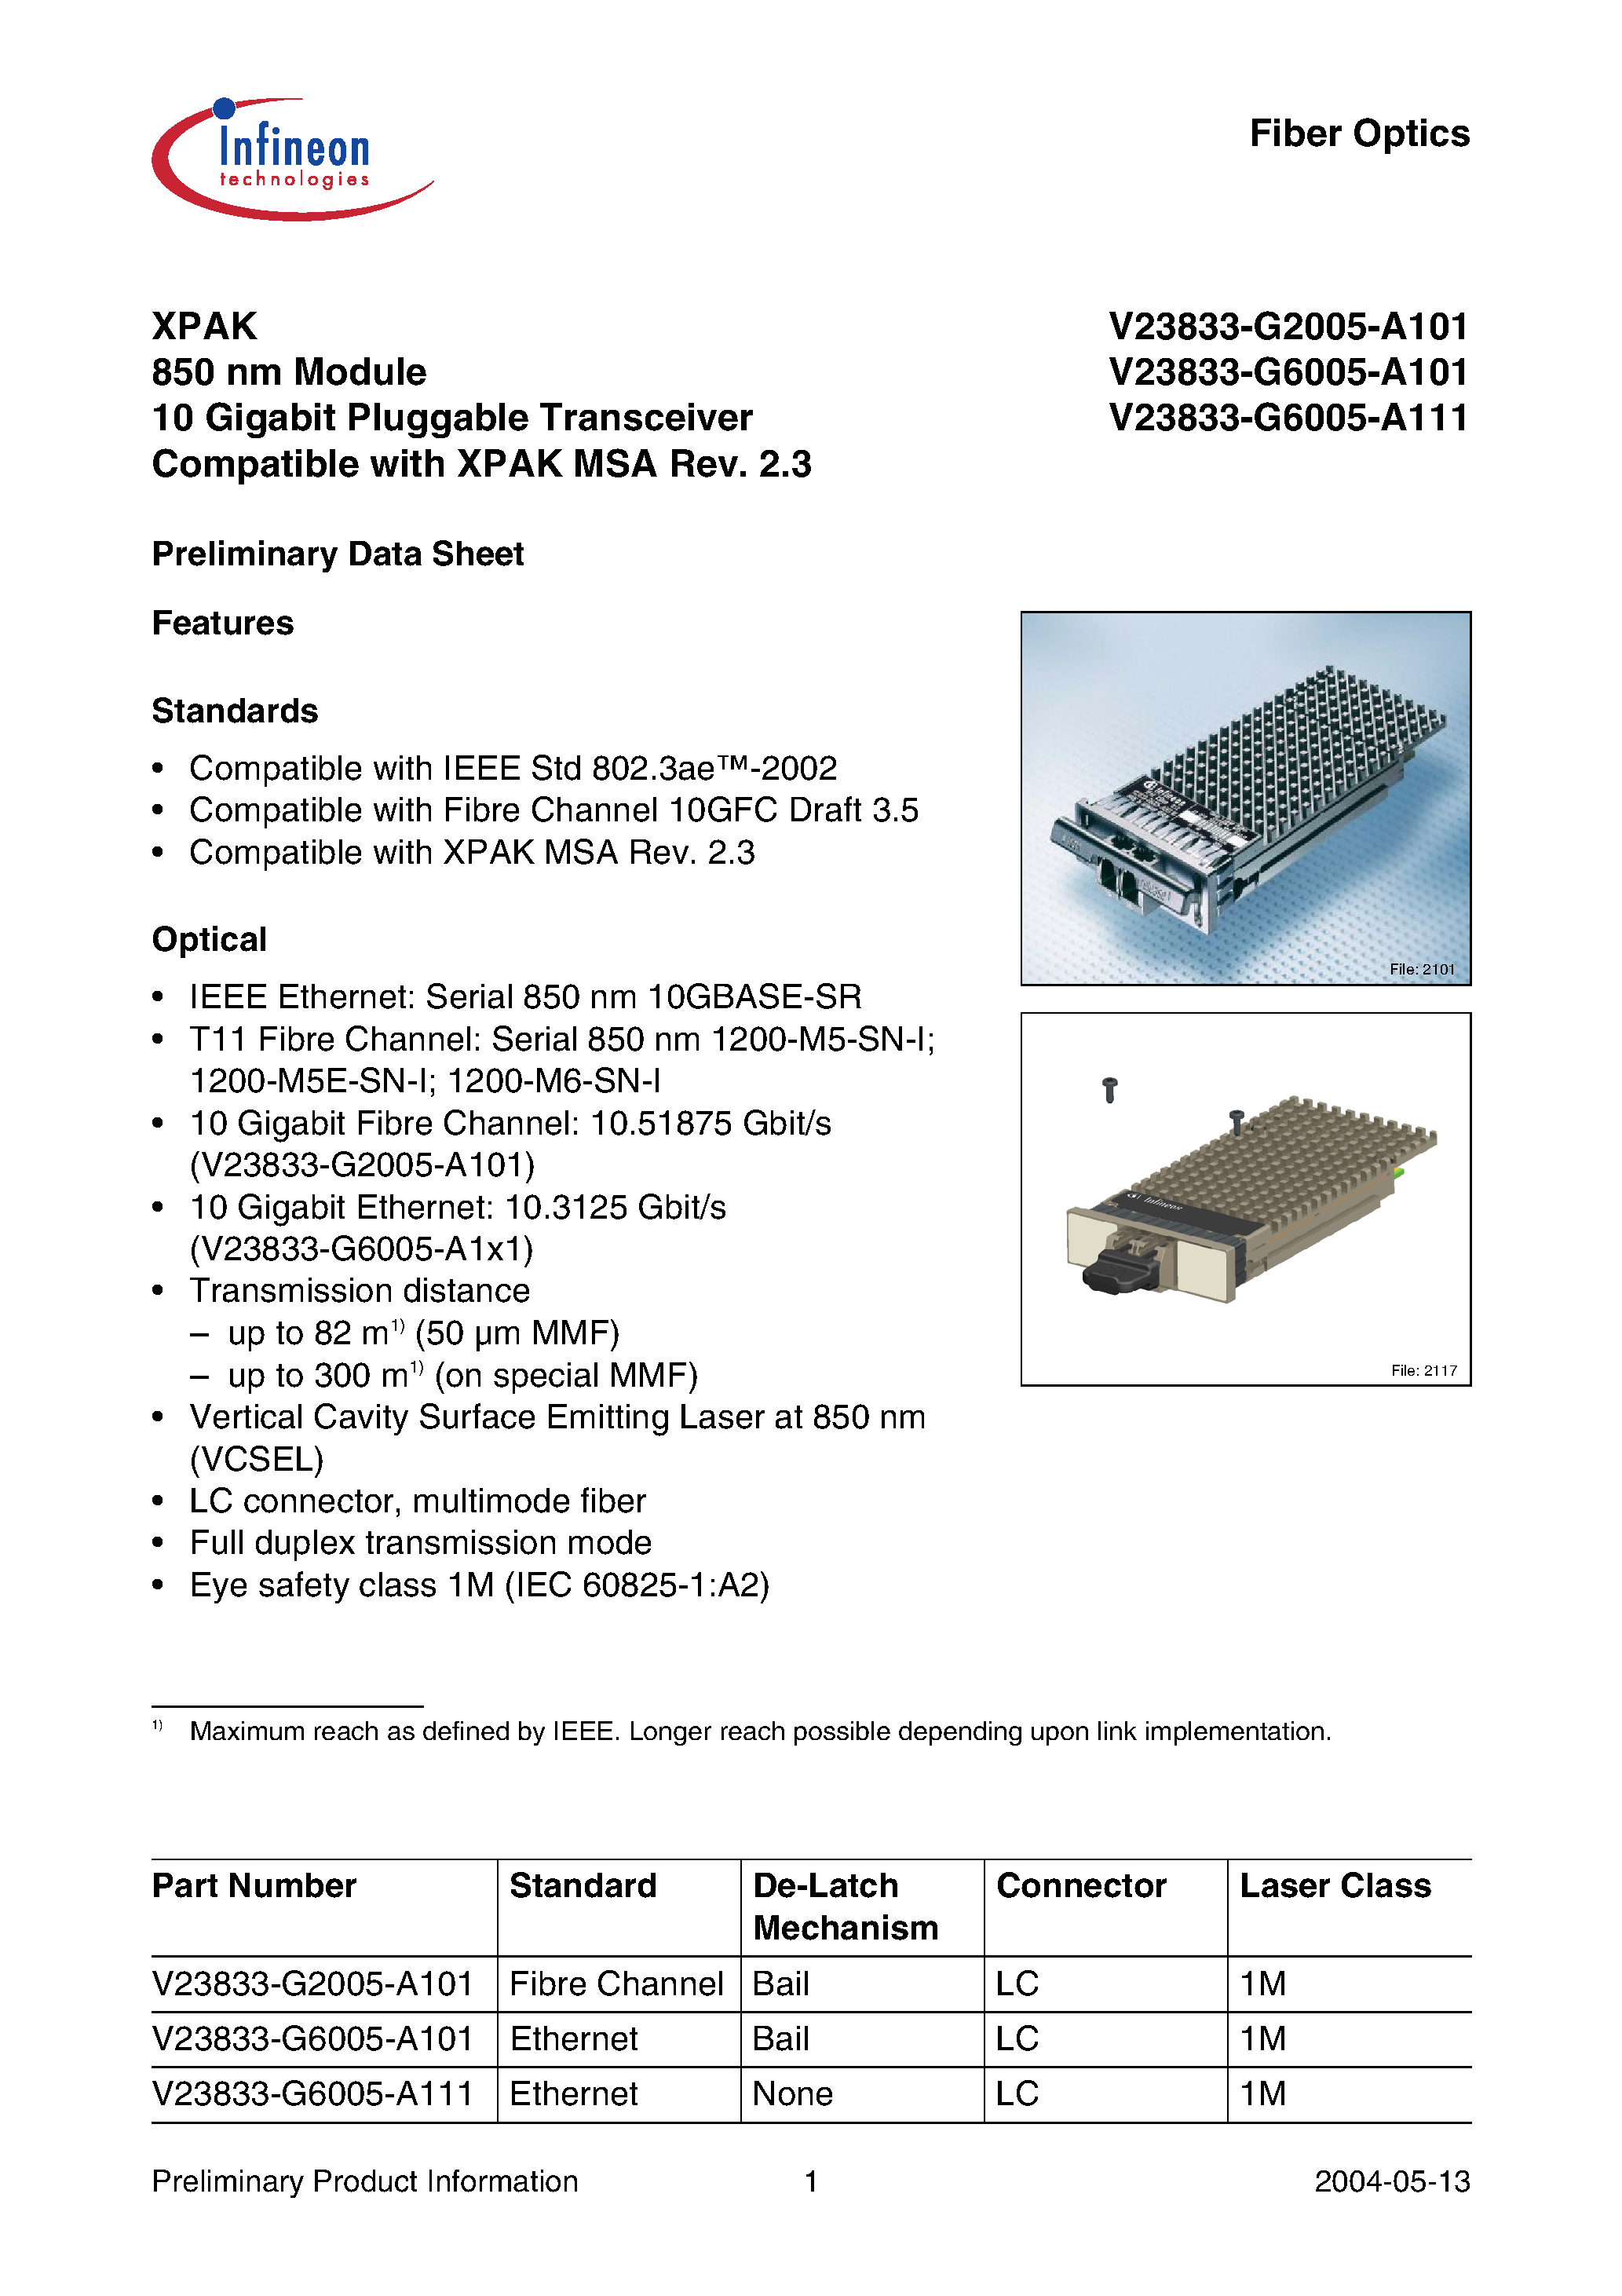 Datasheet V23833-G6005-A111 - XPAK 850 nm Module 10 Gigabit Pluggable Transceiver Compatible with XPAK MSA Rev. 2.3 page 1